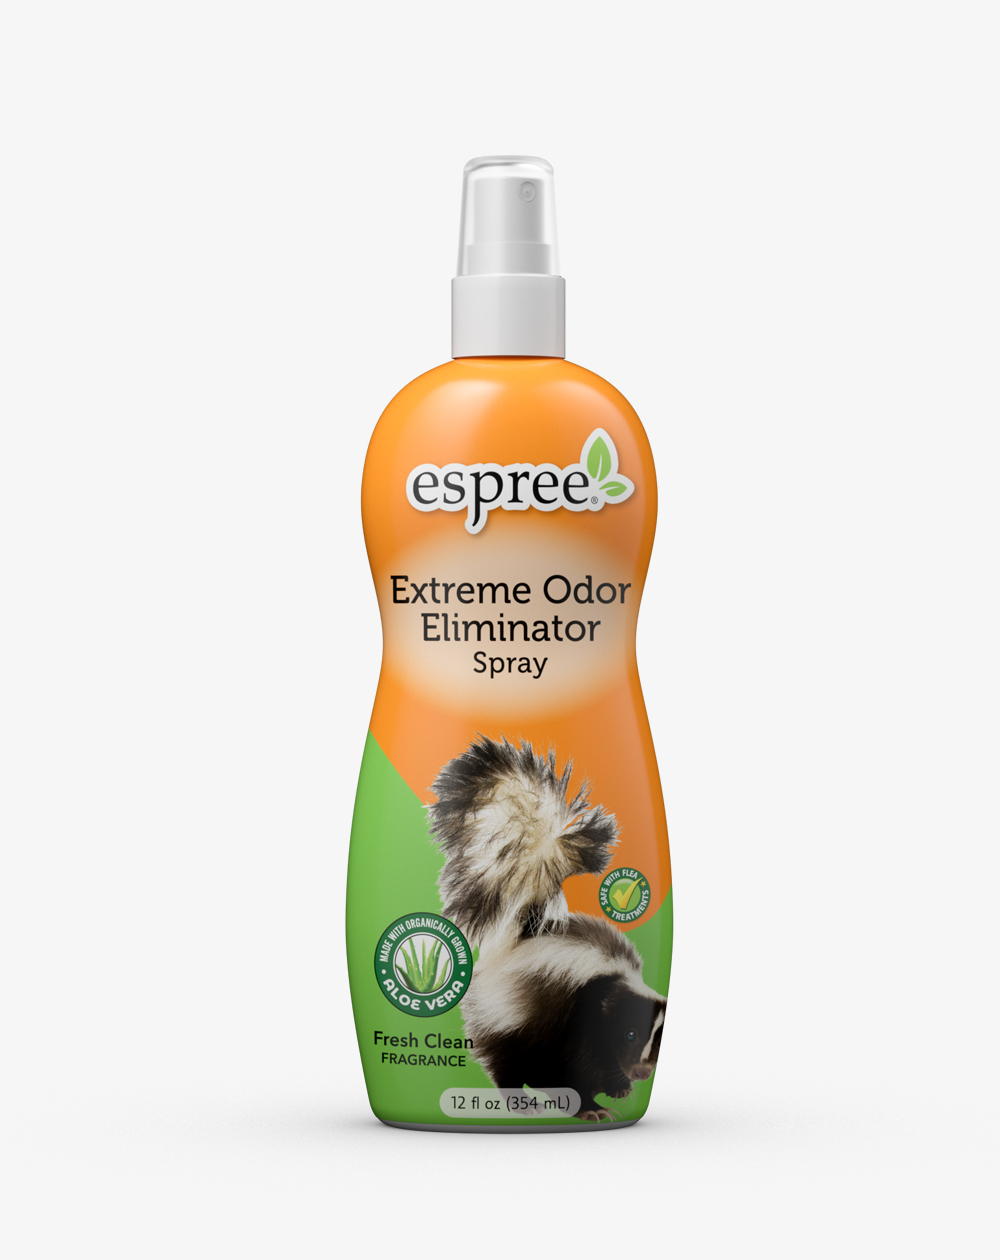 Espree Extreme Odor Eliminator Spray